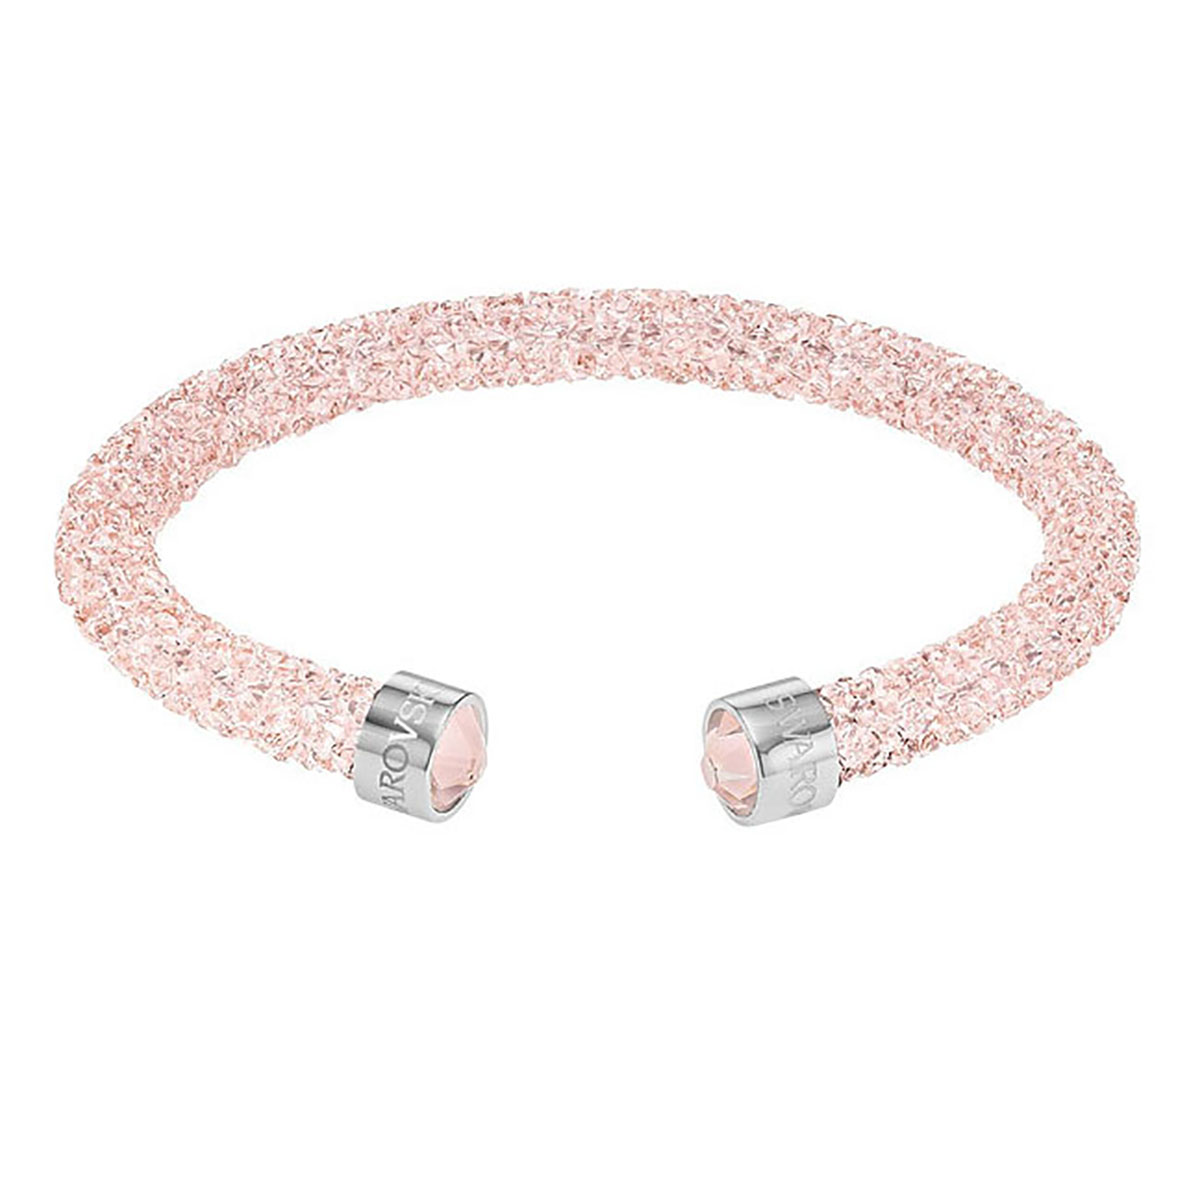 Swarovski Crystaldust Pink Crystal Cuff Bracelet, Medium